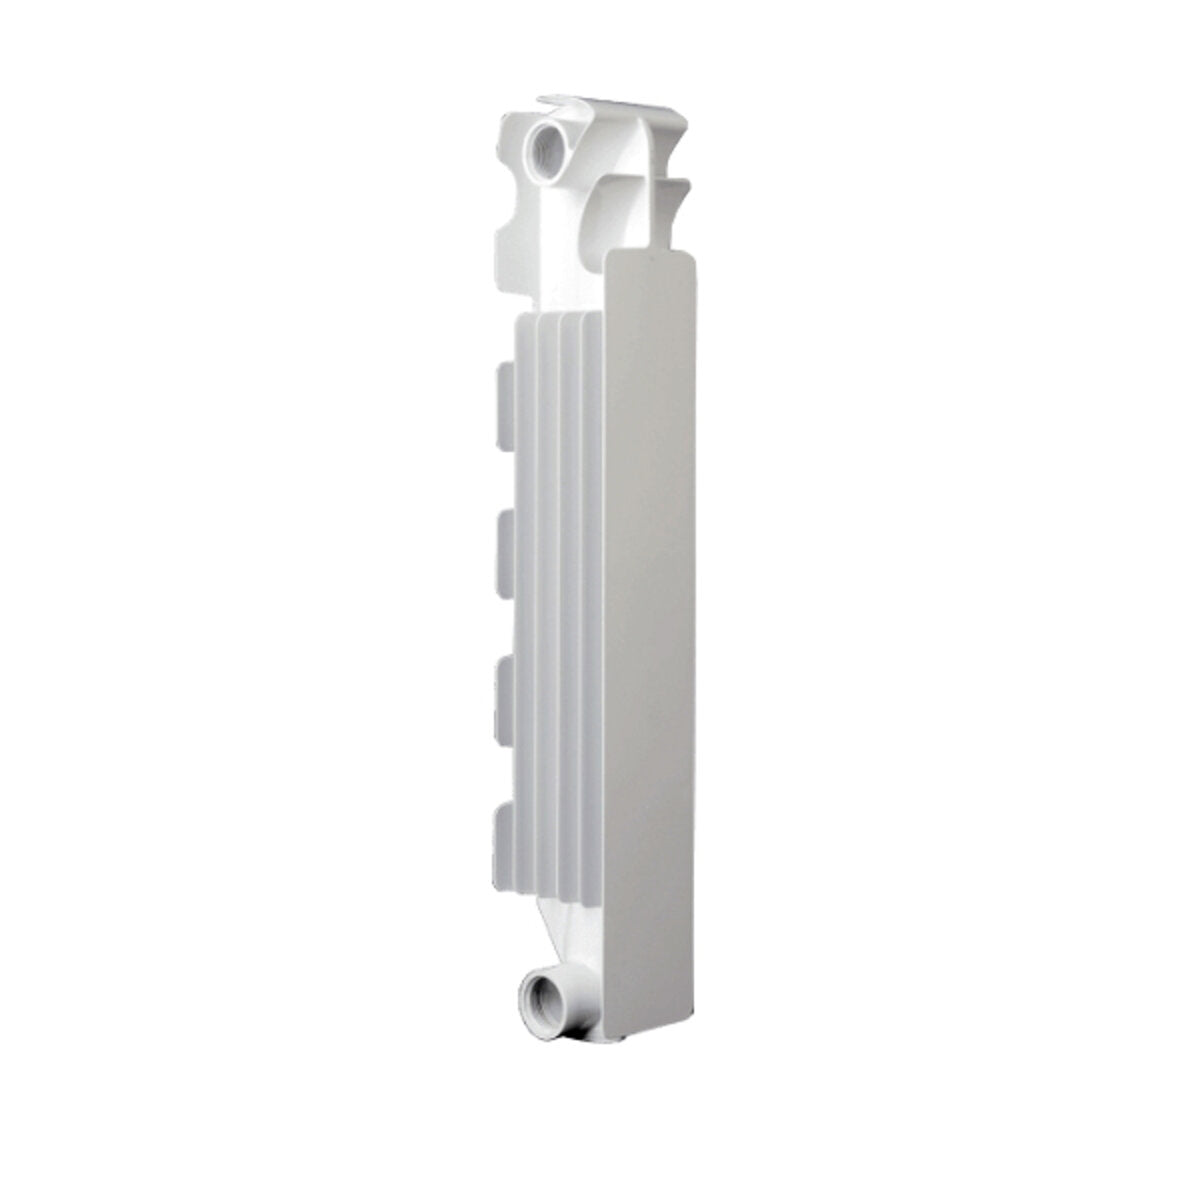 Fondital radiator in die-cast aluminum calidor super b4 single element center distance 700 mm